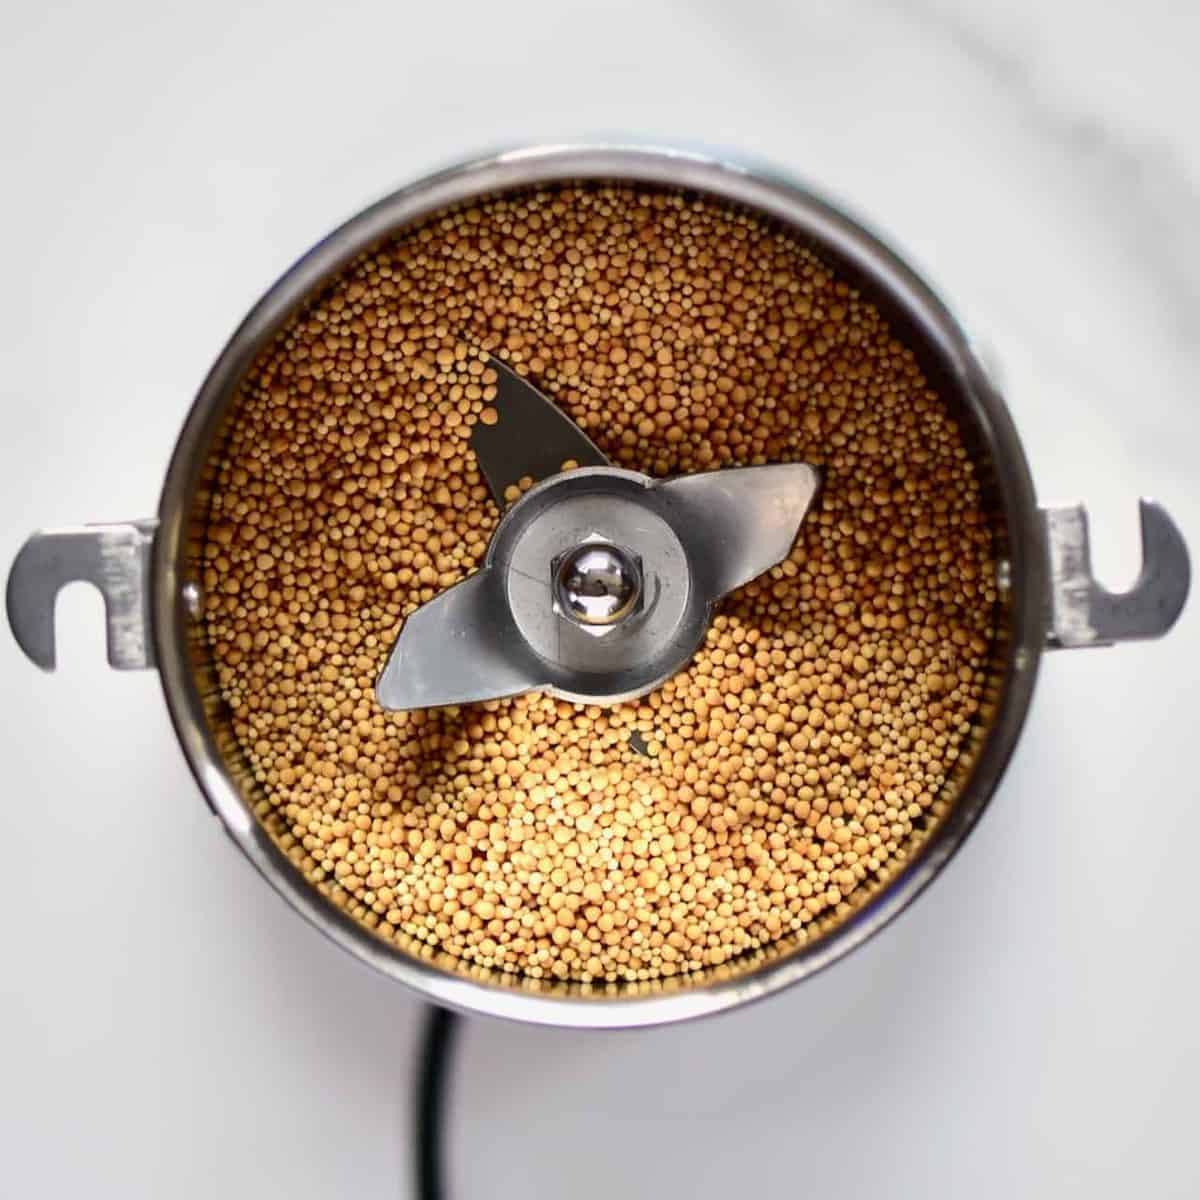 mustard seeds in a spice grinder